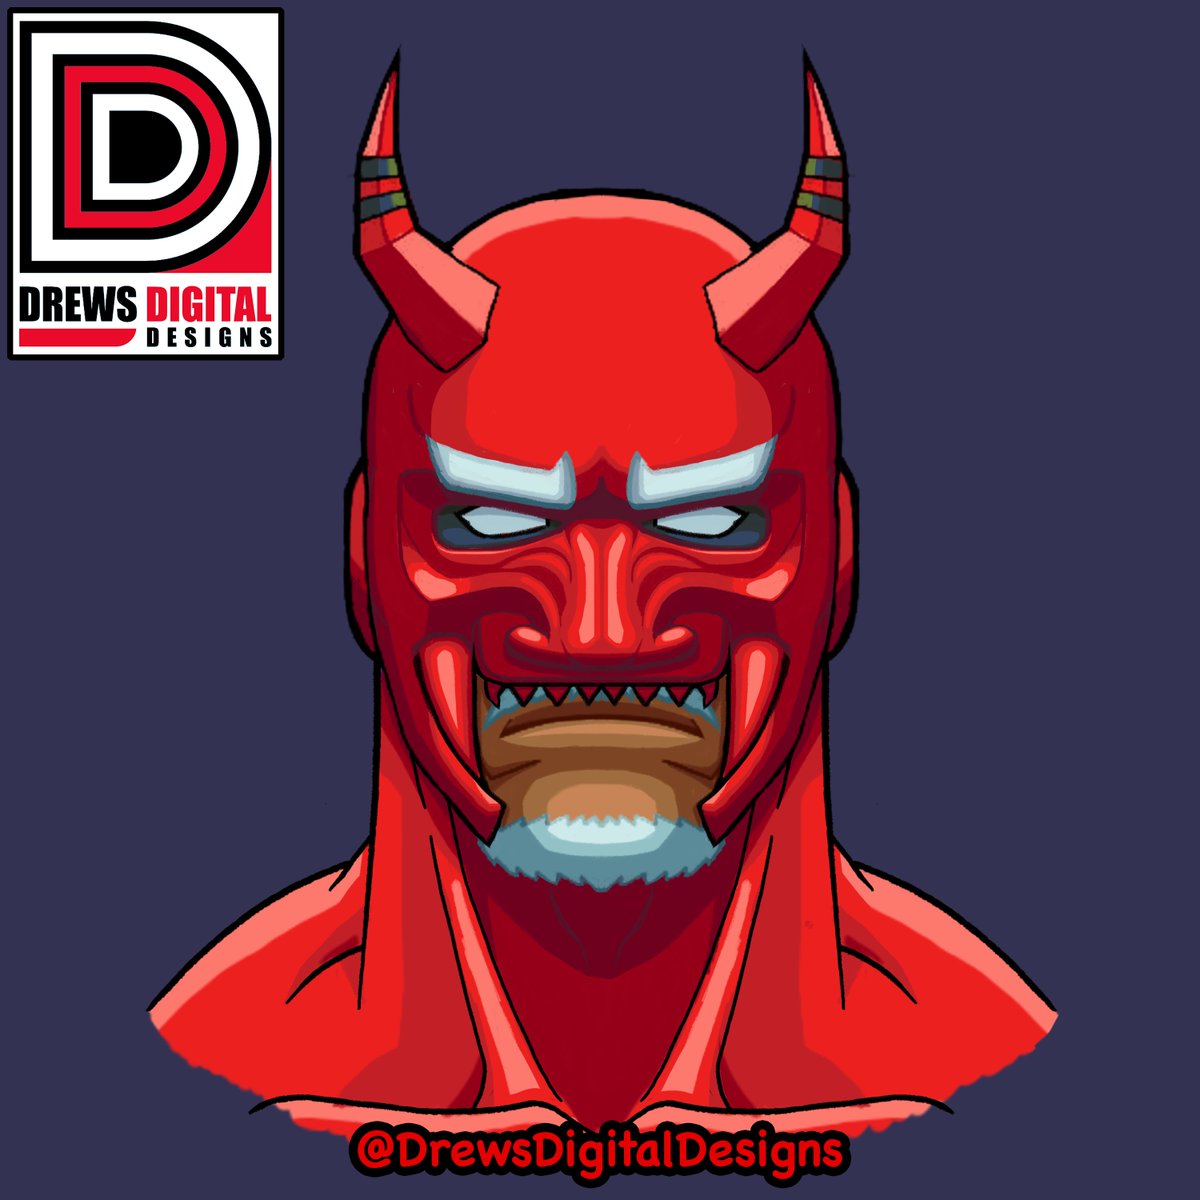 “The Red Oni”
A superhero I created. Concept inspired by The Oni of Japanese Mythology... What y’all think? 🤔
#hero #superhero #red #oni #art #digitalart #graphicdesign #design #characterdesign #martialartist #fighter #secretidentity #mask #japanese  #DrewsdigitalDesigns